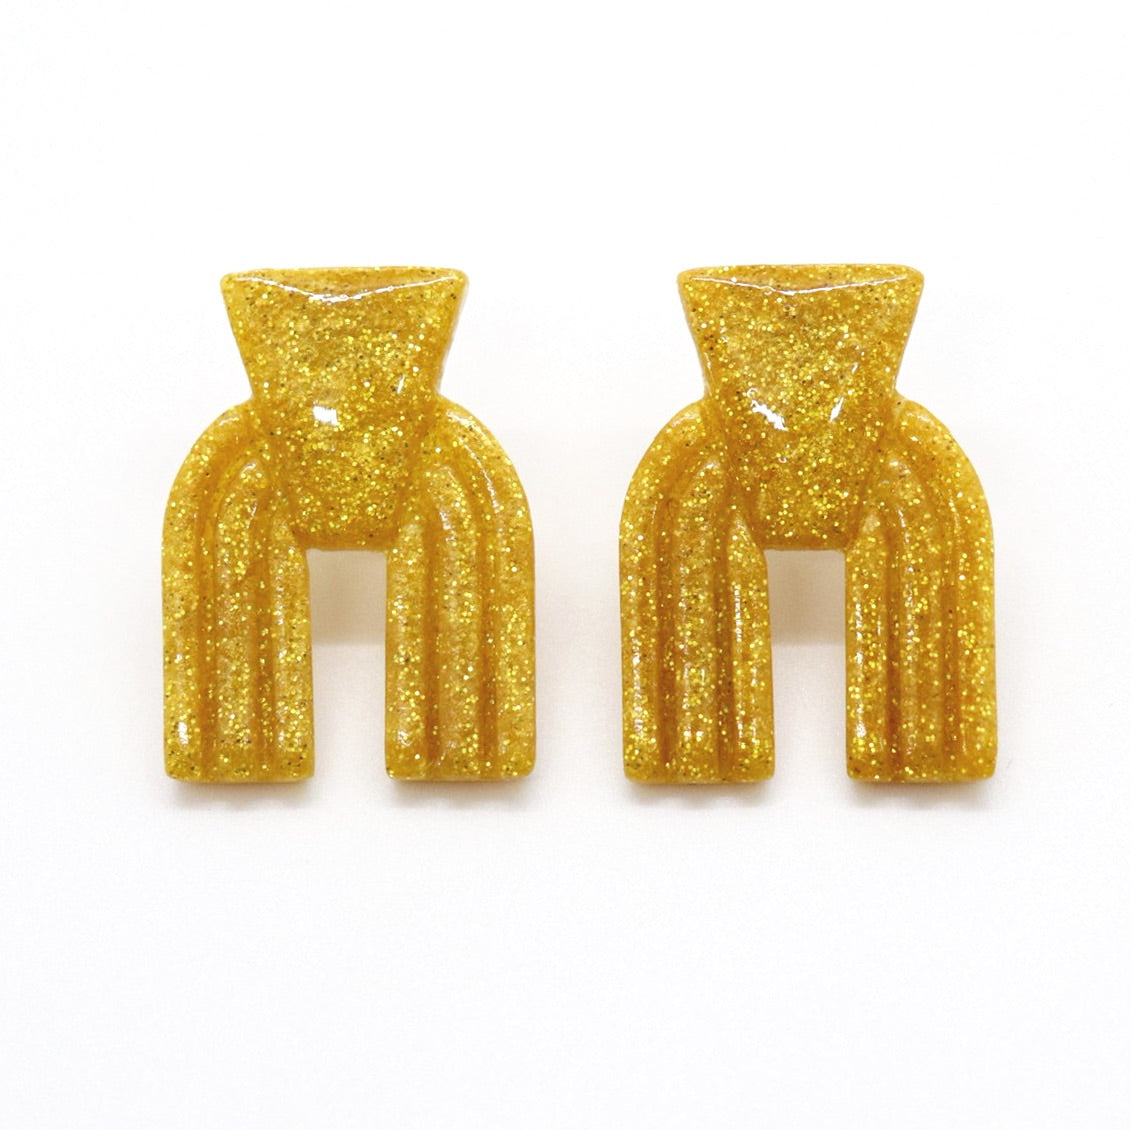 Taos Mini Sparkle Stud Earrings in Yellow Glitter